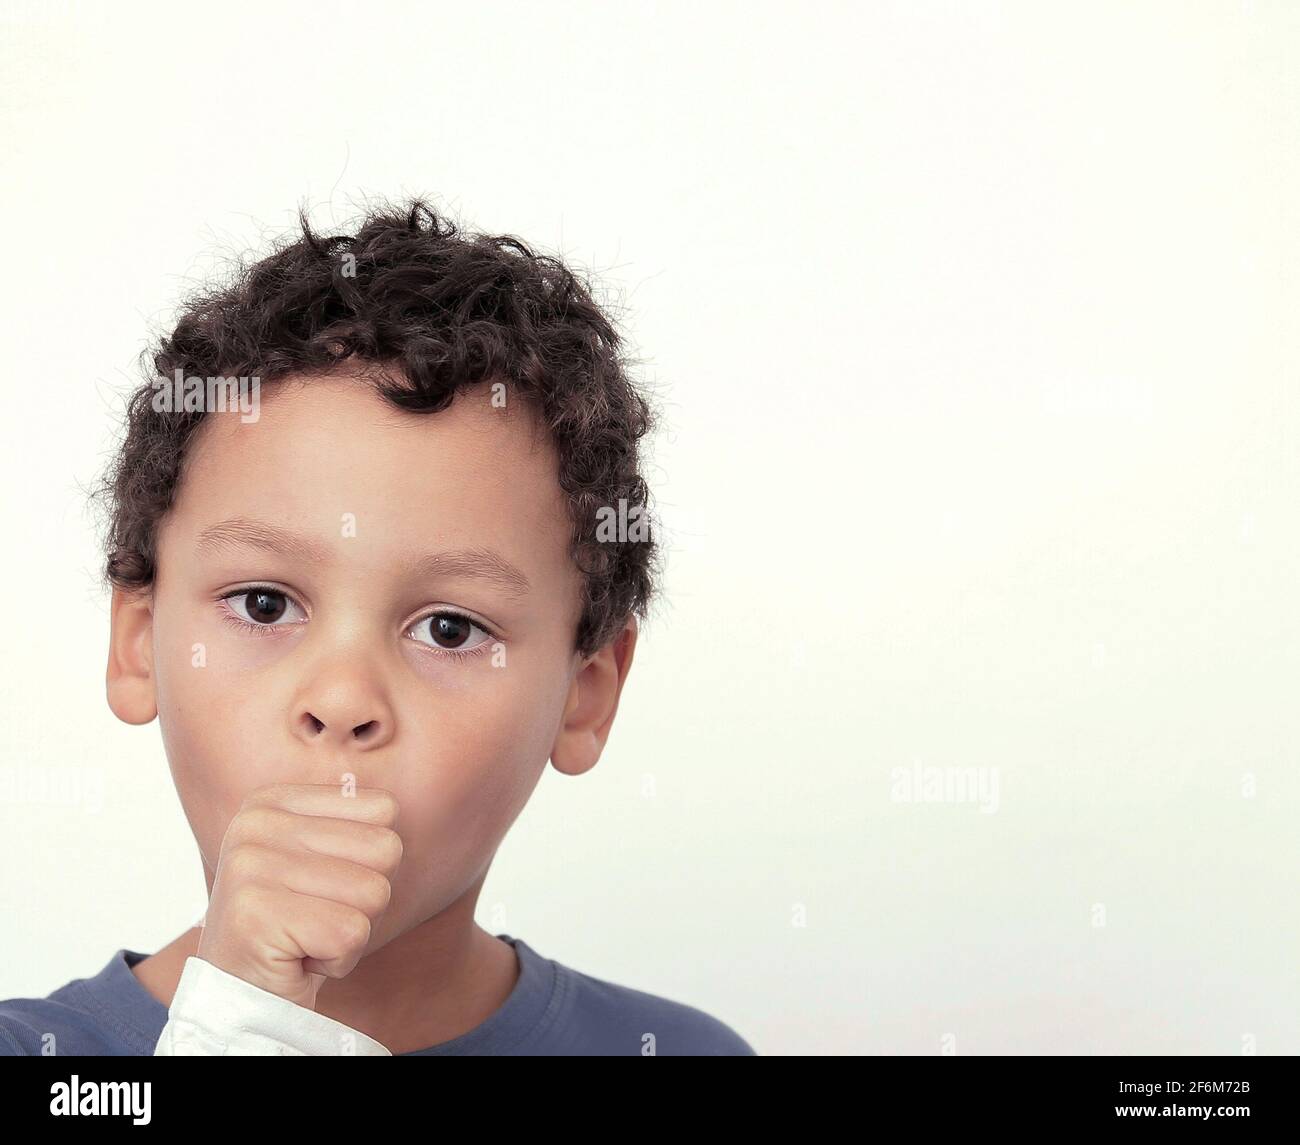 boy sucking thumb on white background stock photo Stock Photo